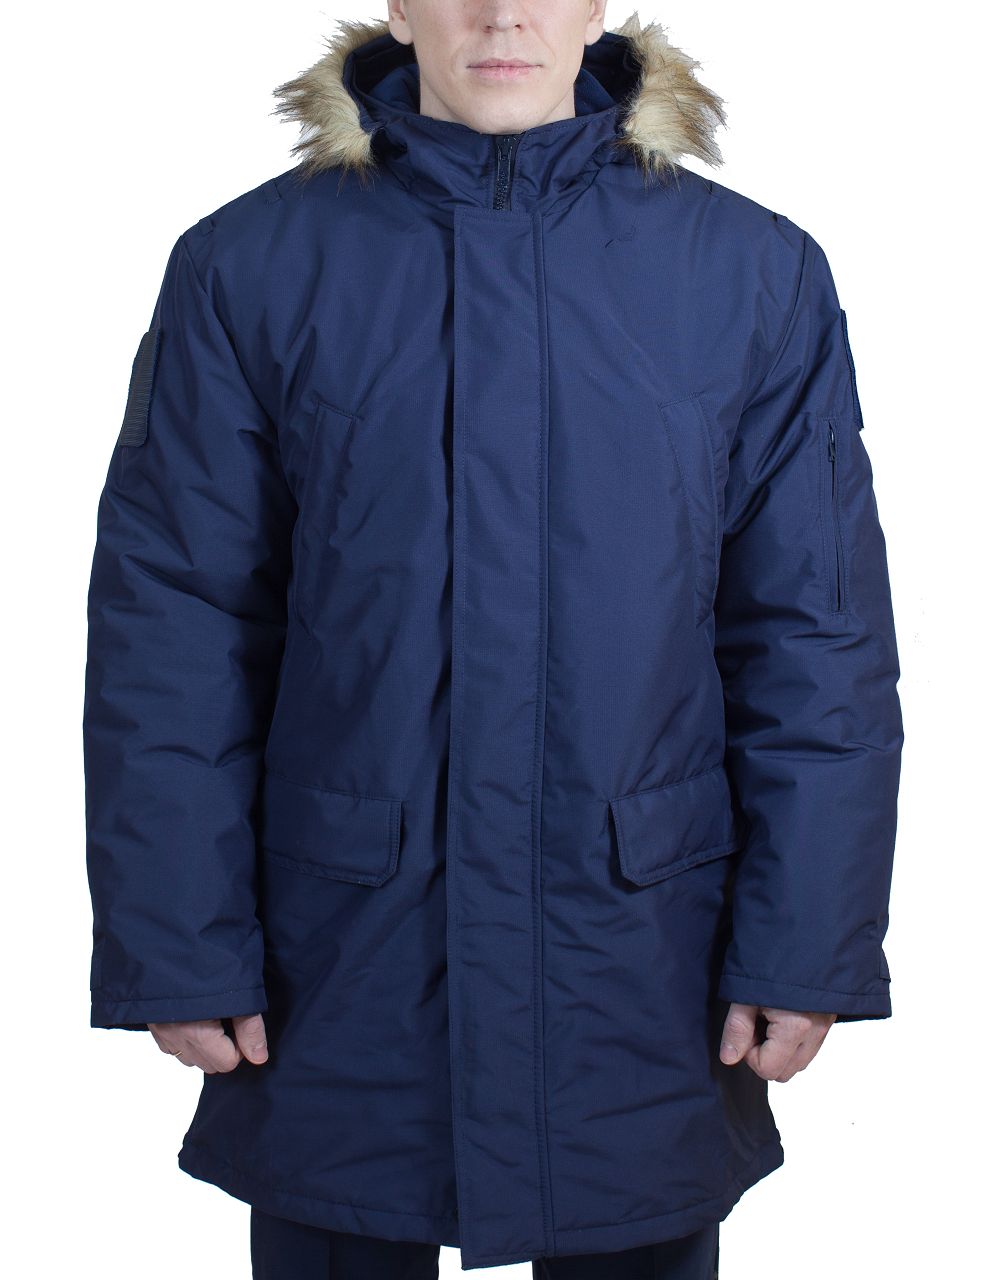 Аляска 2. Куртка зимняя Аляска армейская синяя. Куртка МПА-40 Аляска. Куртка Аляска форменная Магеллан. Куртка зимняя ВМФ Аляска.